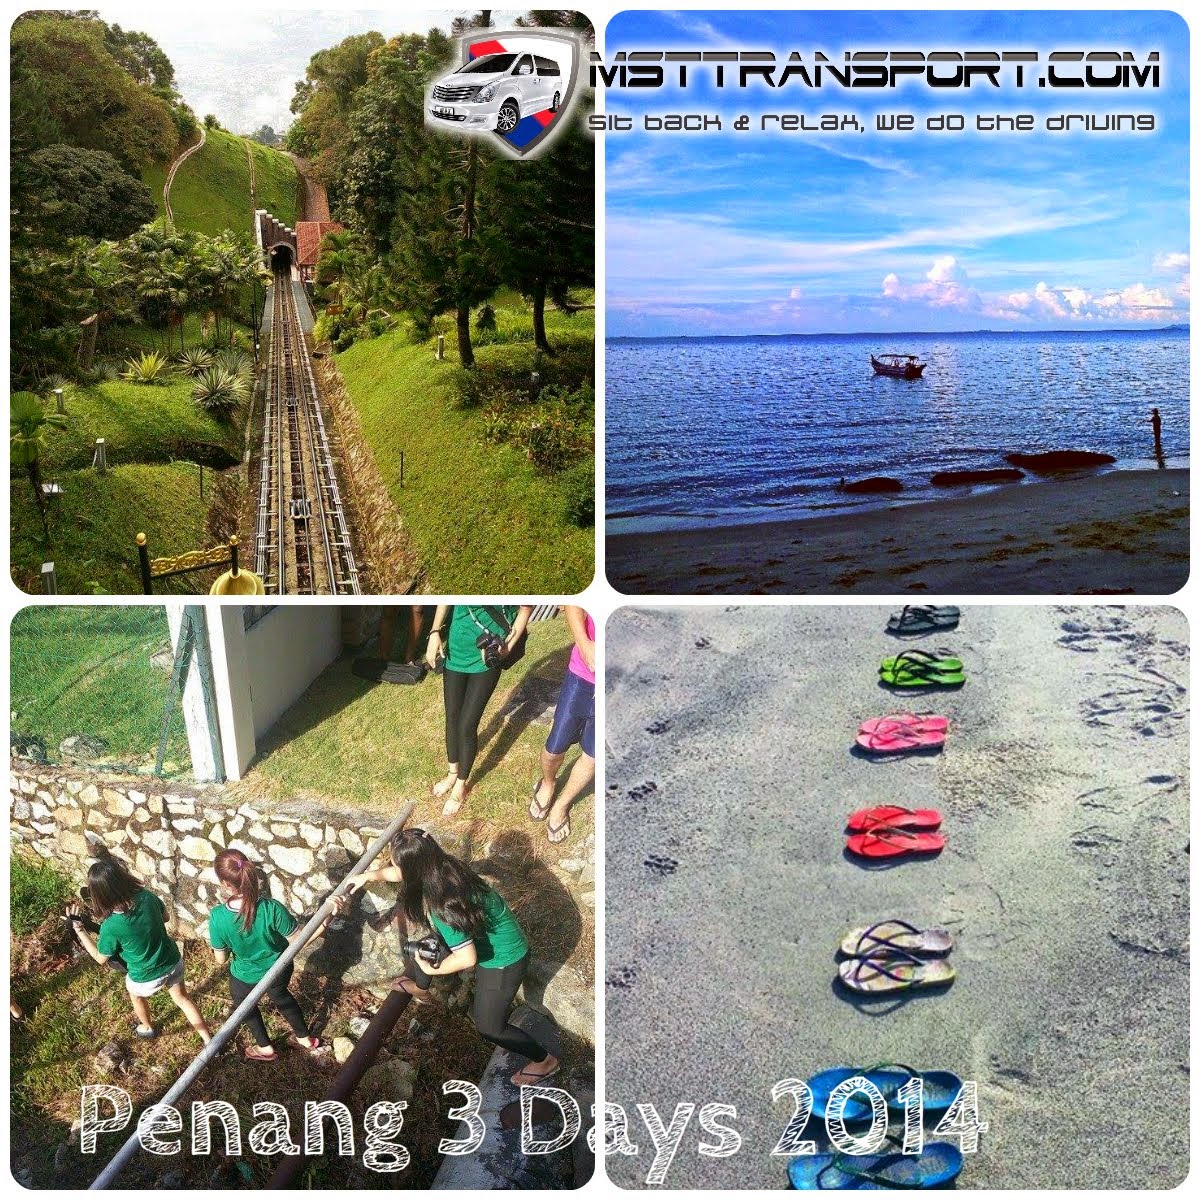 3D2N Penang Trip 2014